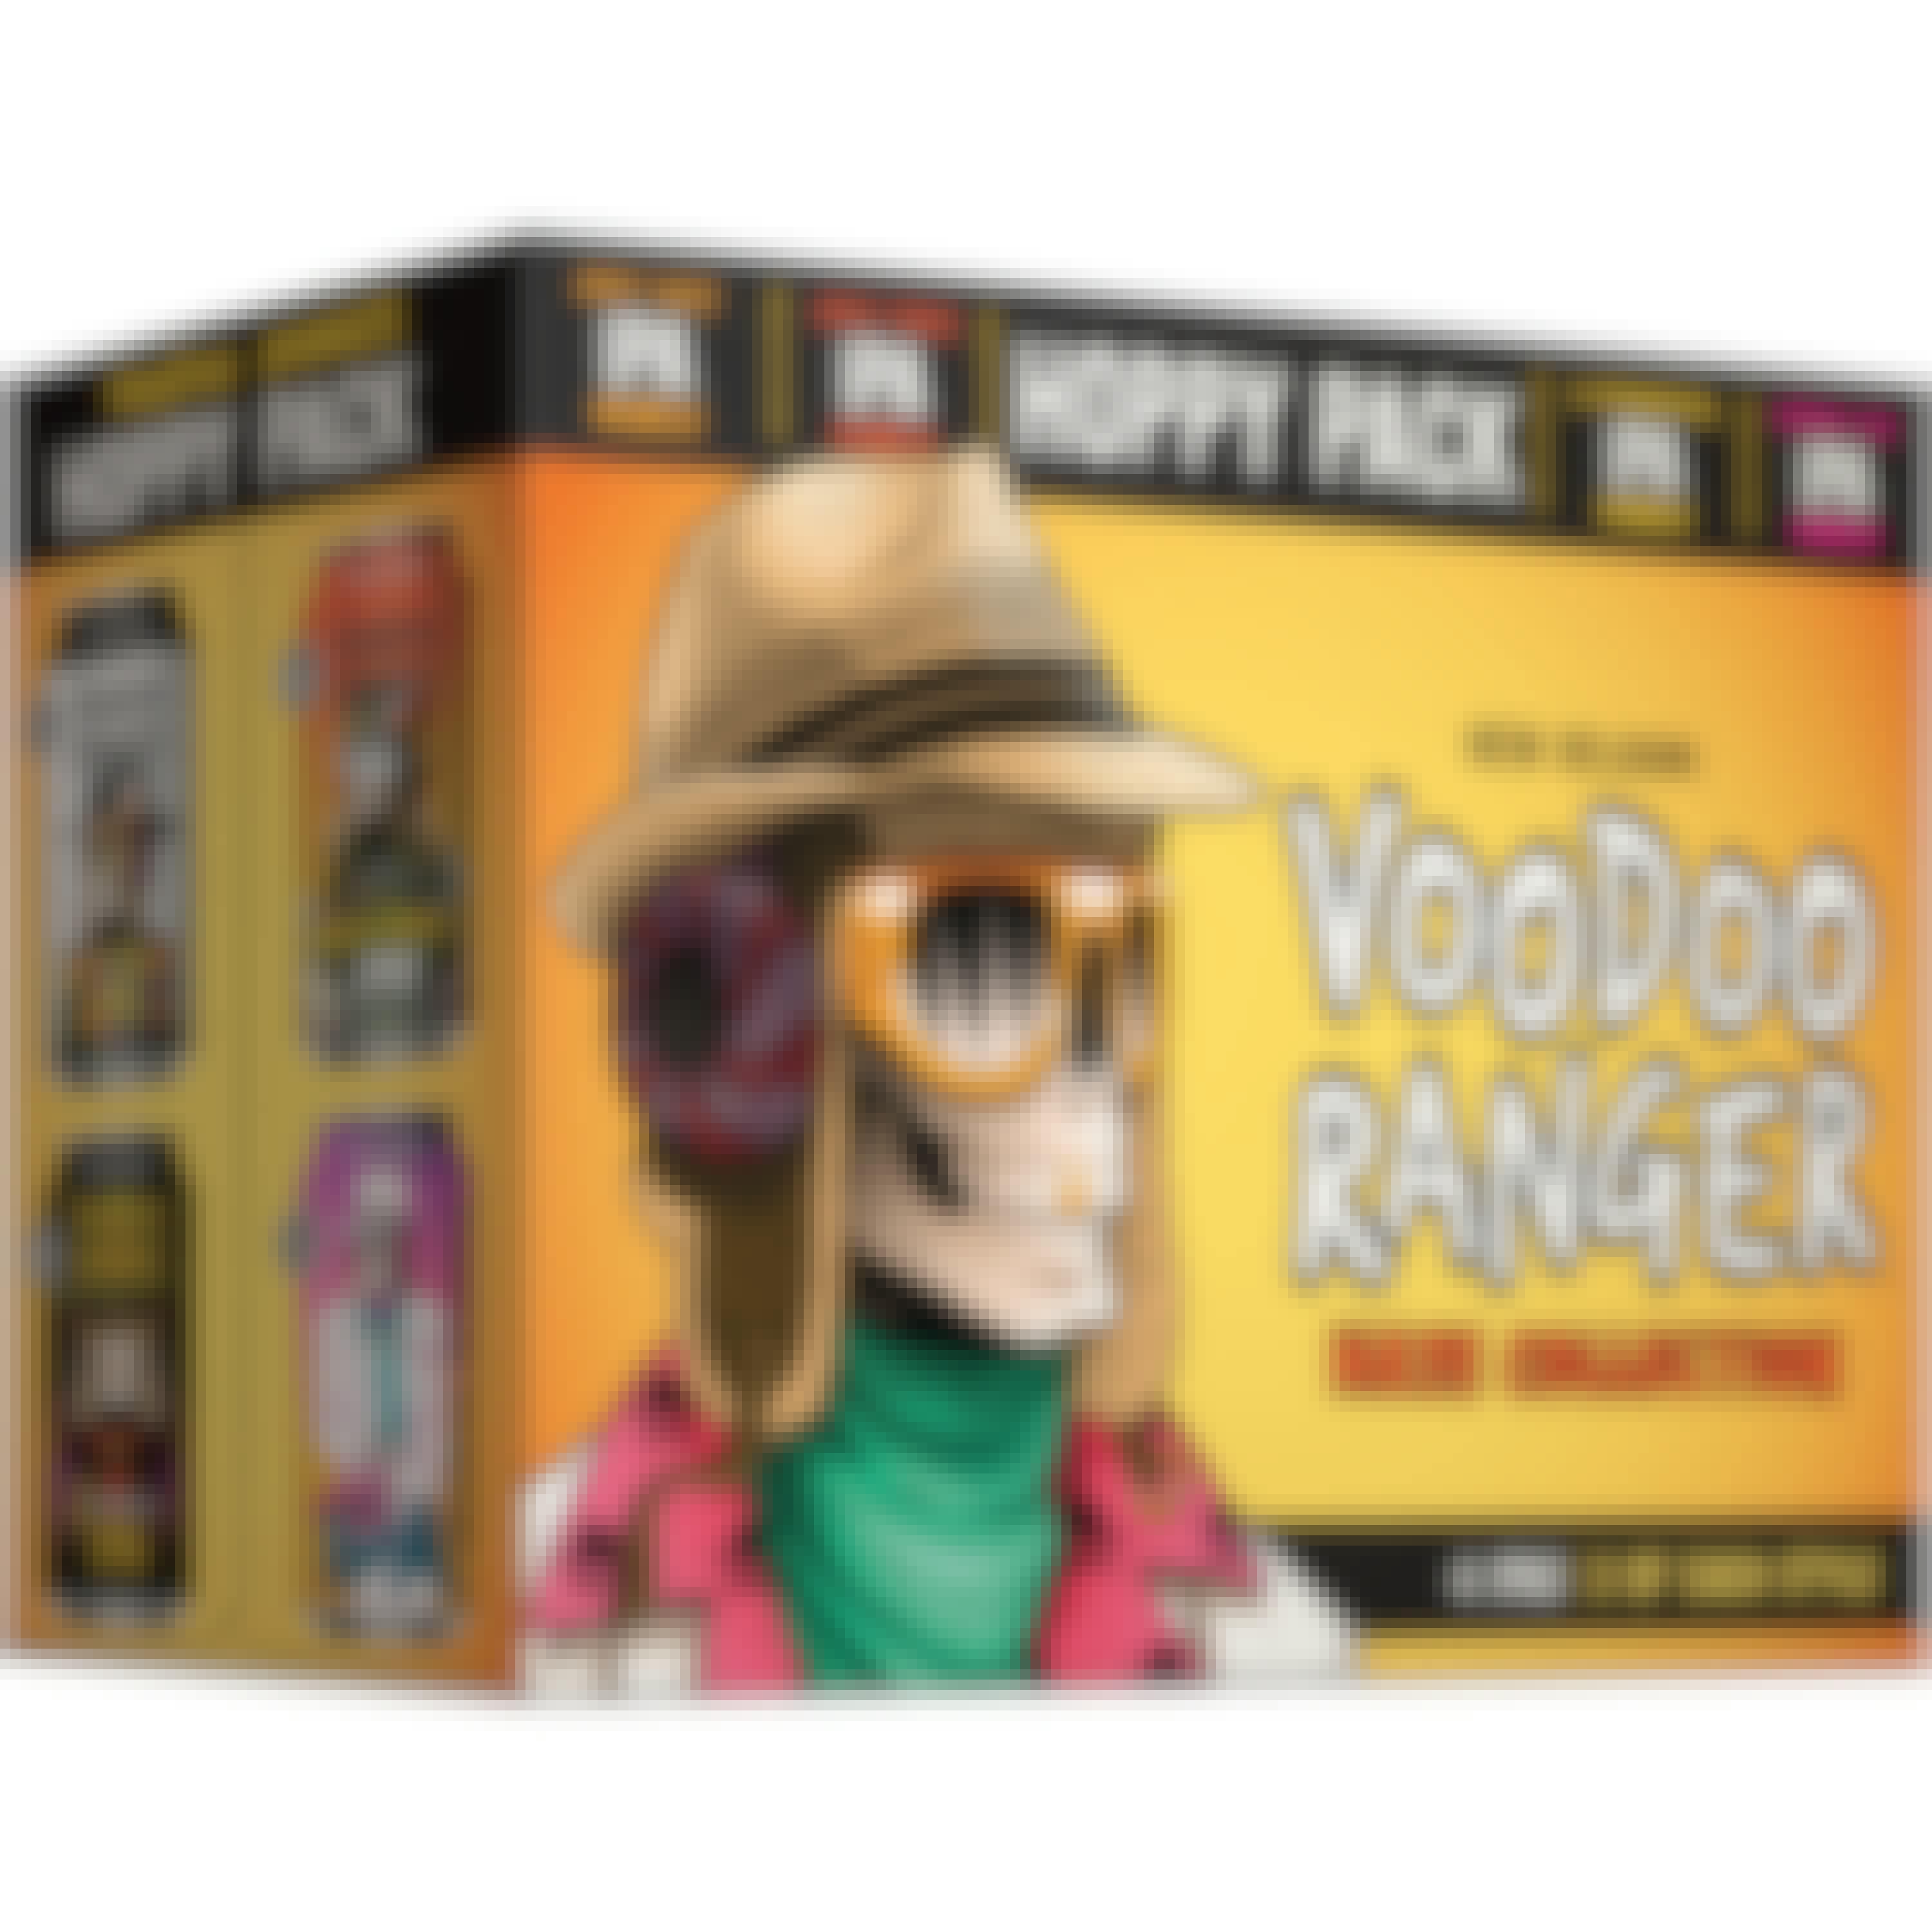 New Belgium Voodoo Ranger Hoppy Variety Pack 12 pack Can